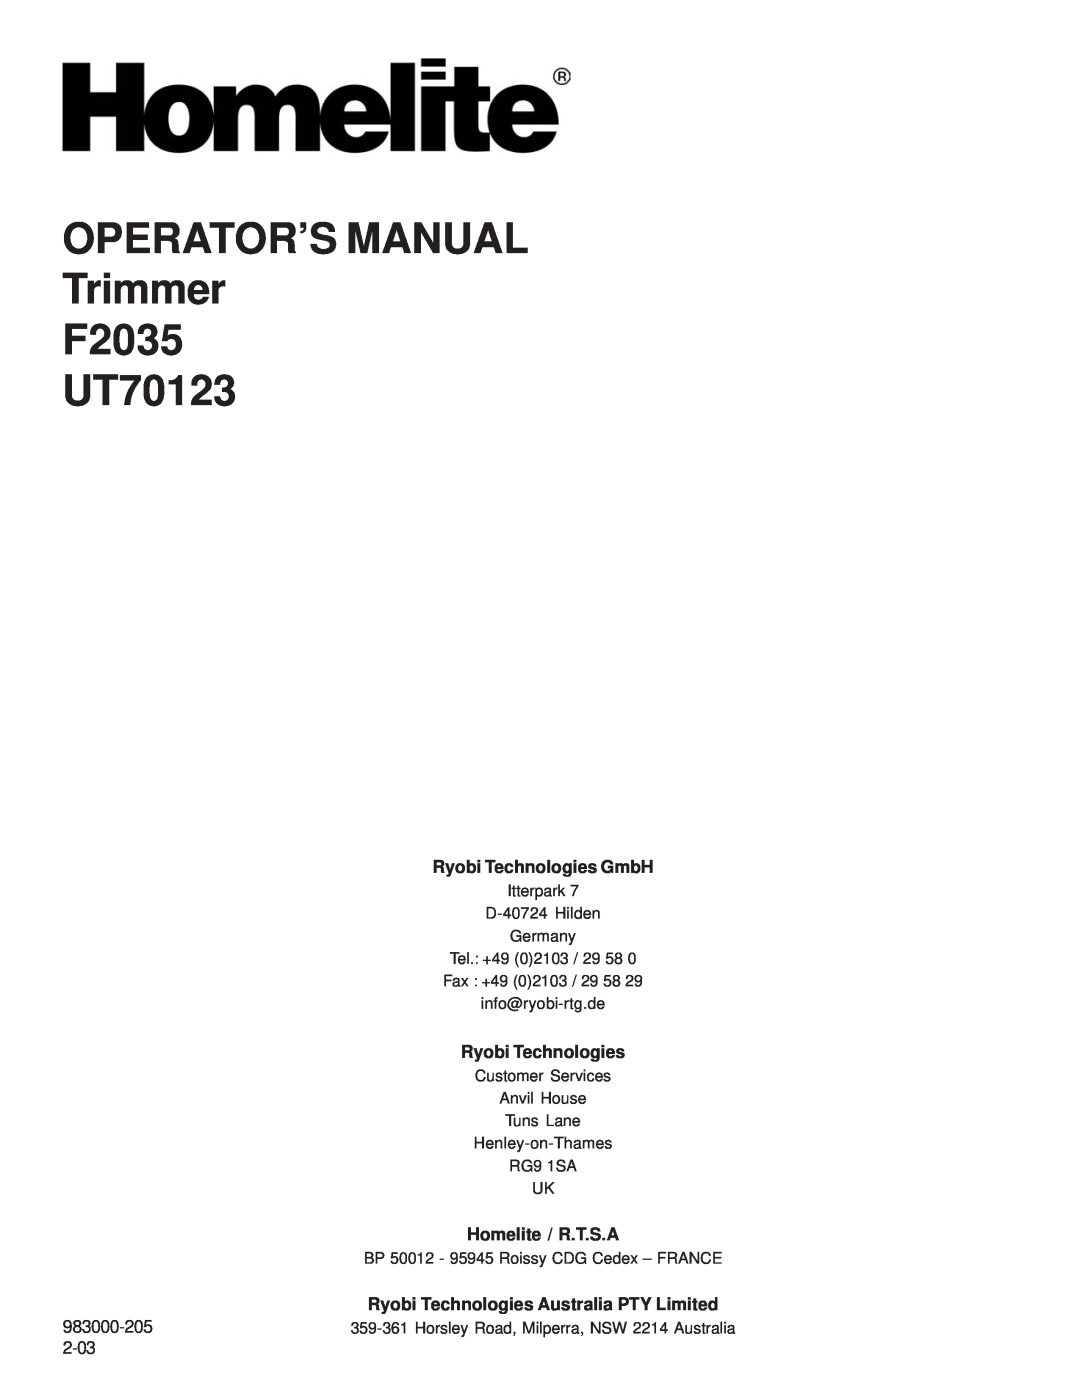 Homelite manual Ryobi Technologies GmbH, OPERATOR’S MANUAL Trimmer F2035 UT70123, Homelite / R.T.S.A 